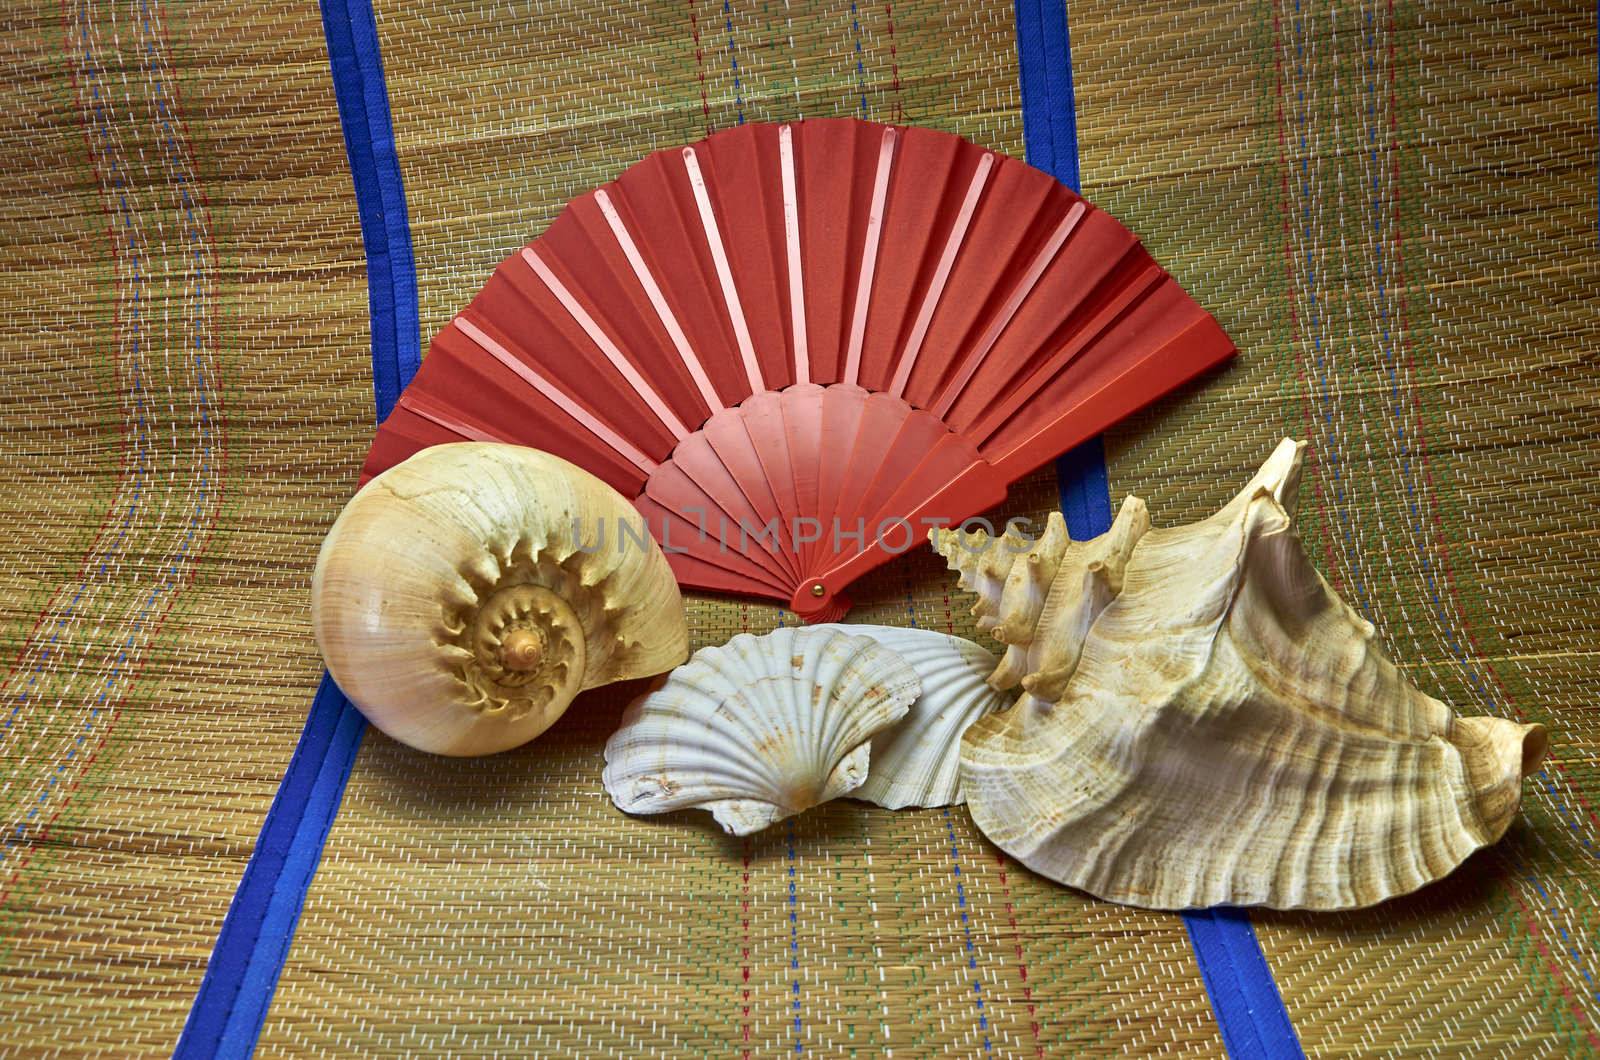 Sea shells on a beach mat with a fan